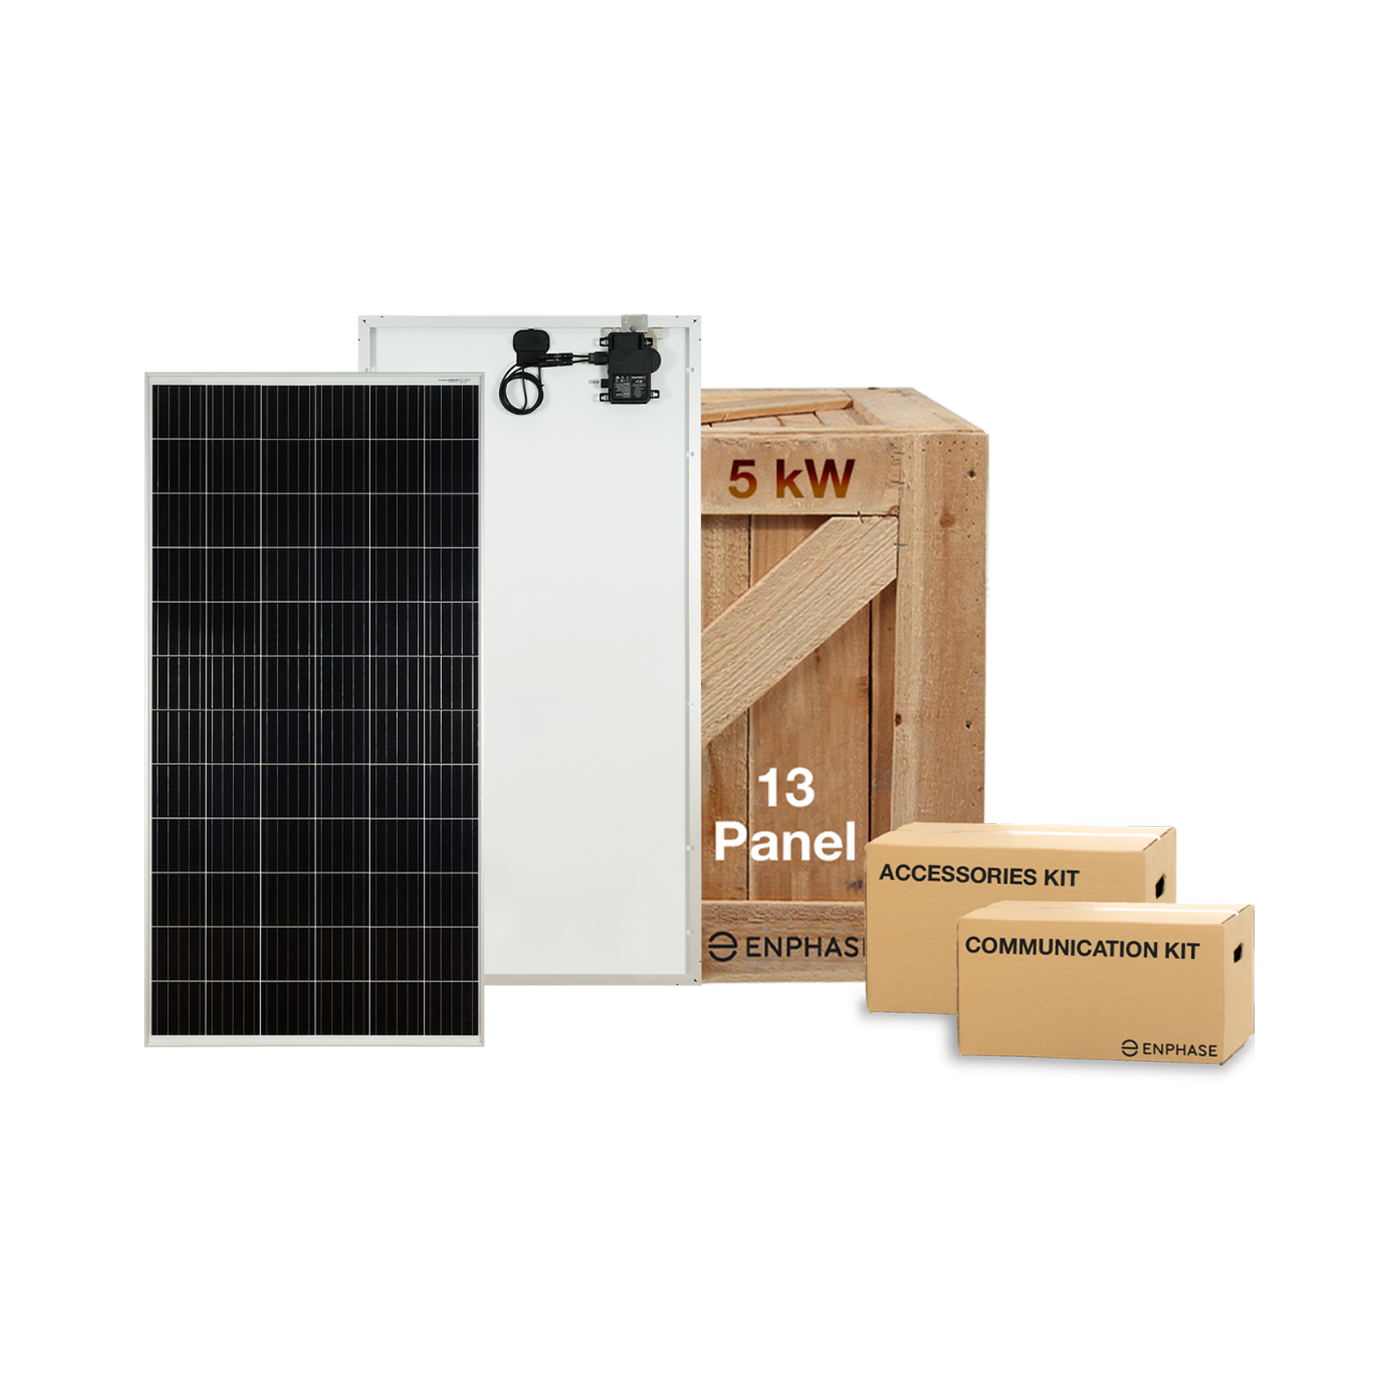 5 kW Panasonic Solar System Kit